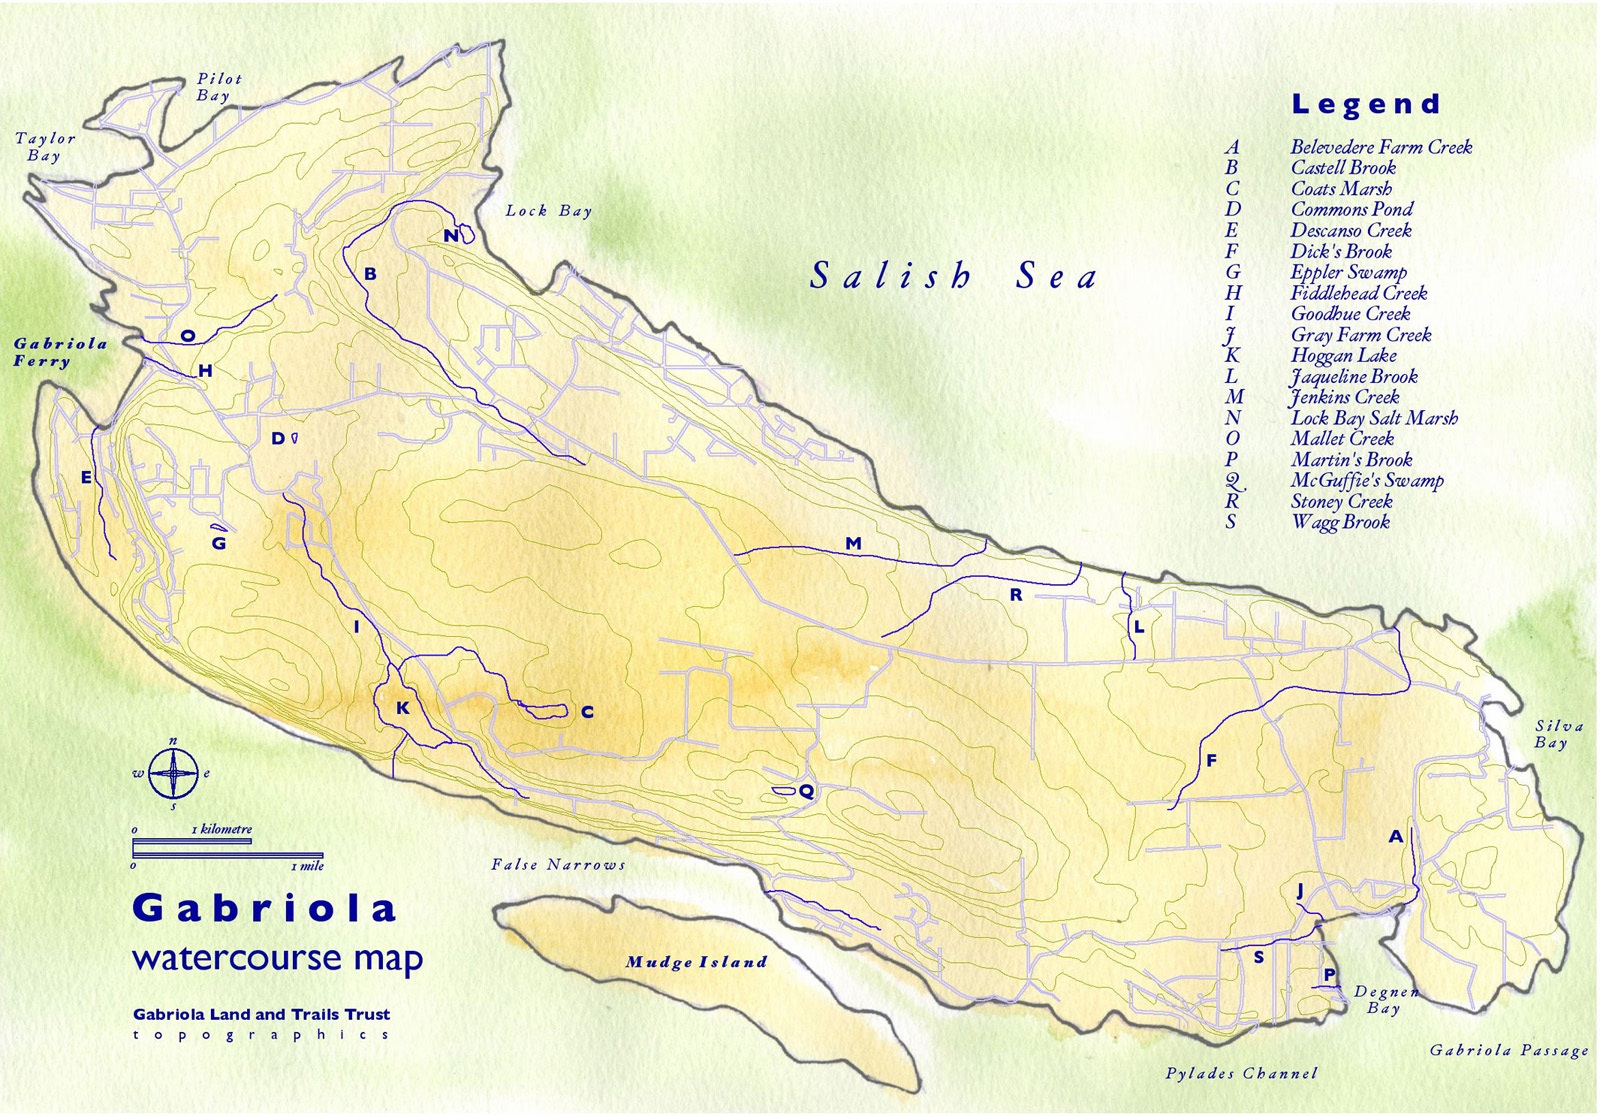 Illustrated map of Gabriola Island with waterways made distinct.